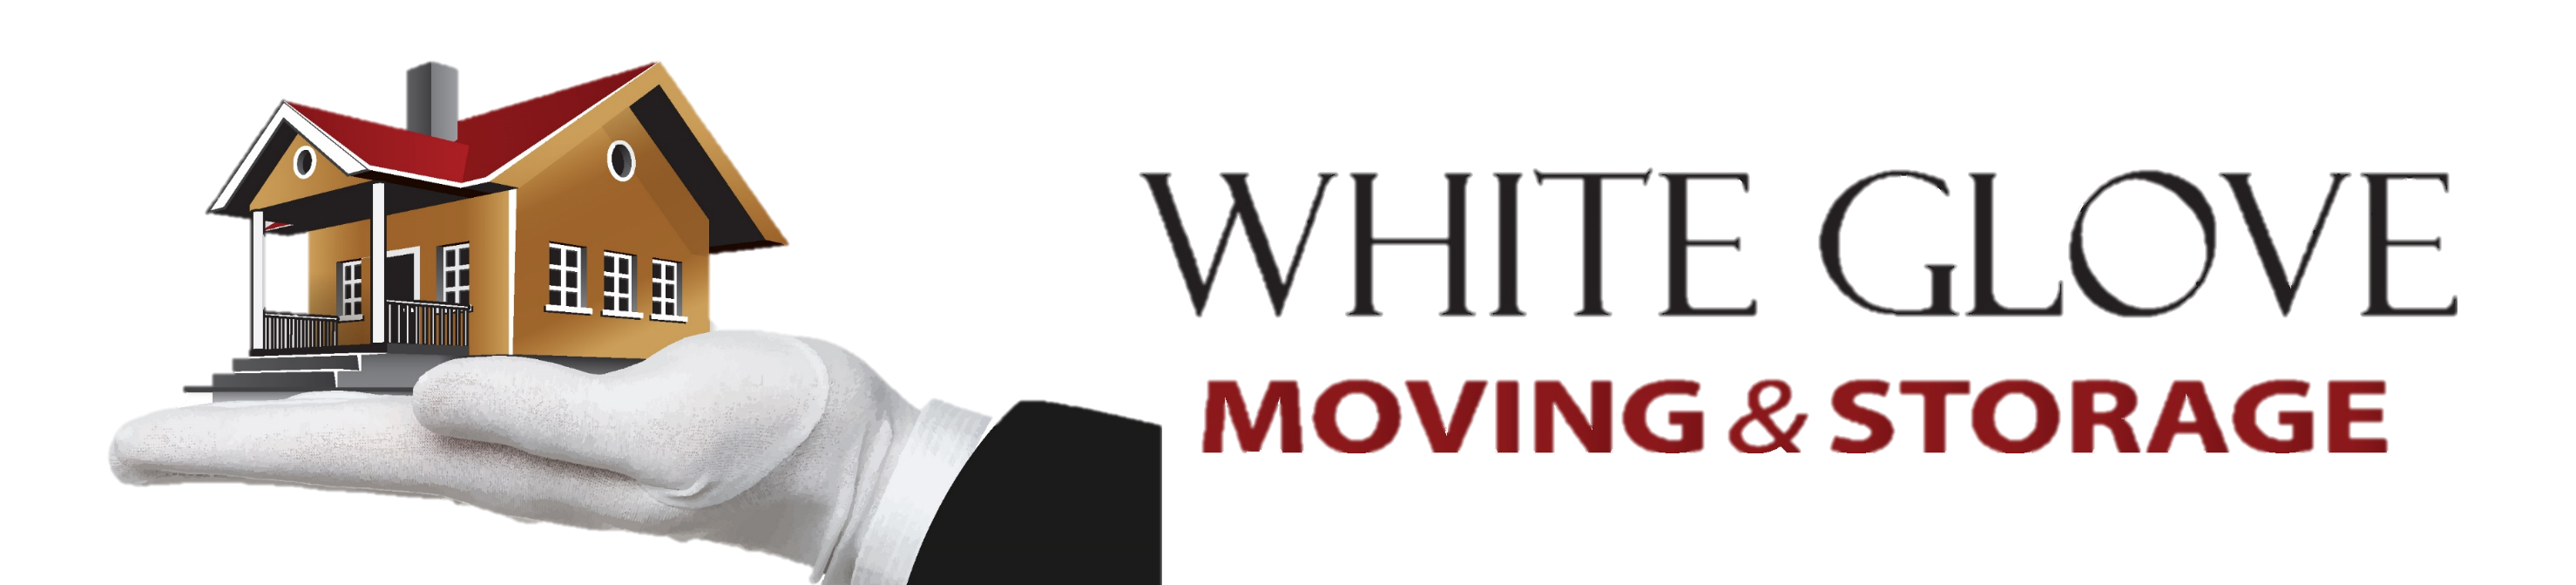 White Glove Moving Storage Logo